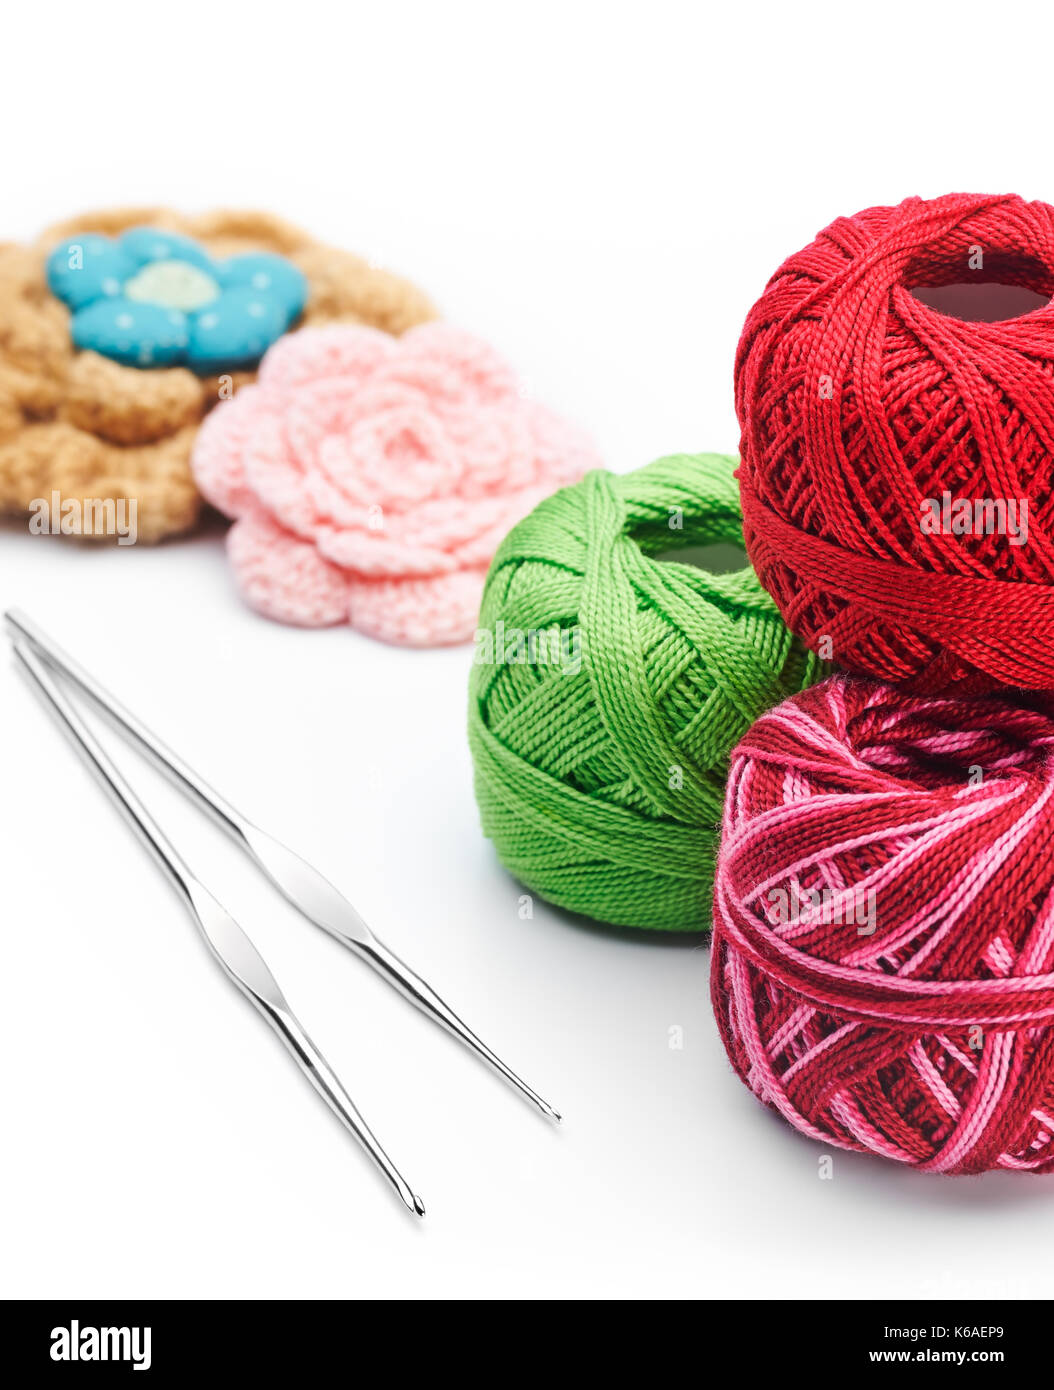 Yarn, hook and handmade crochet flowers. Needlework accessories on white background Stock Photo